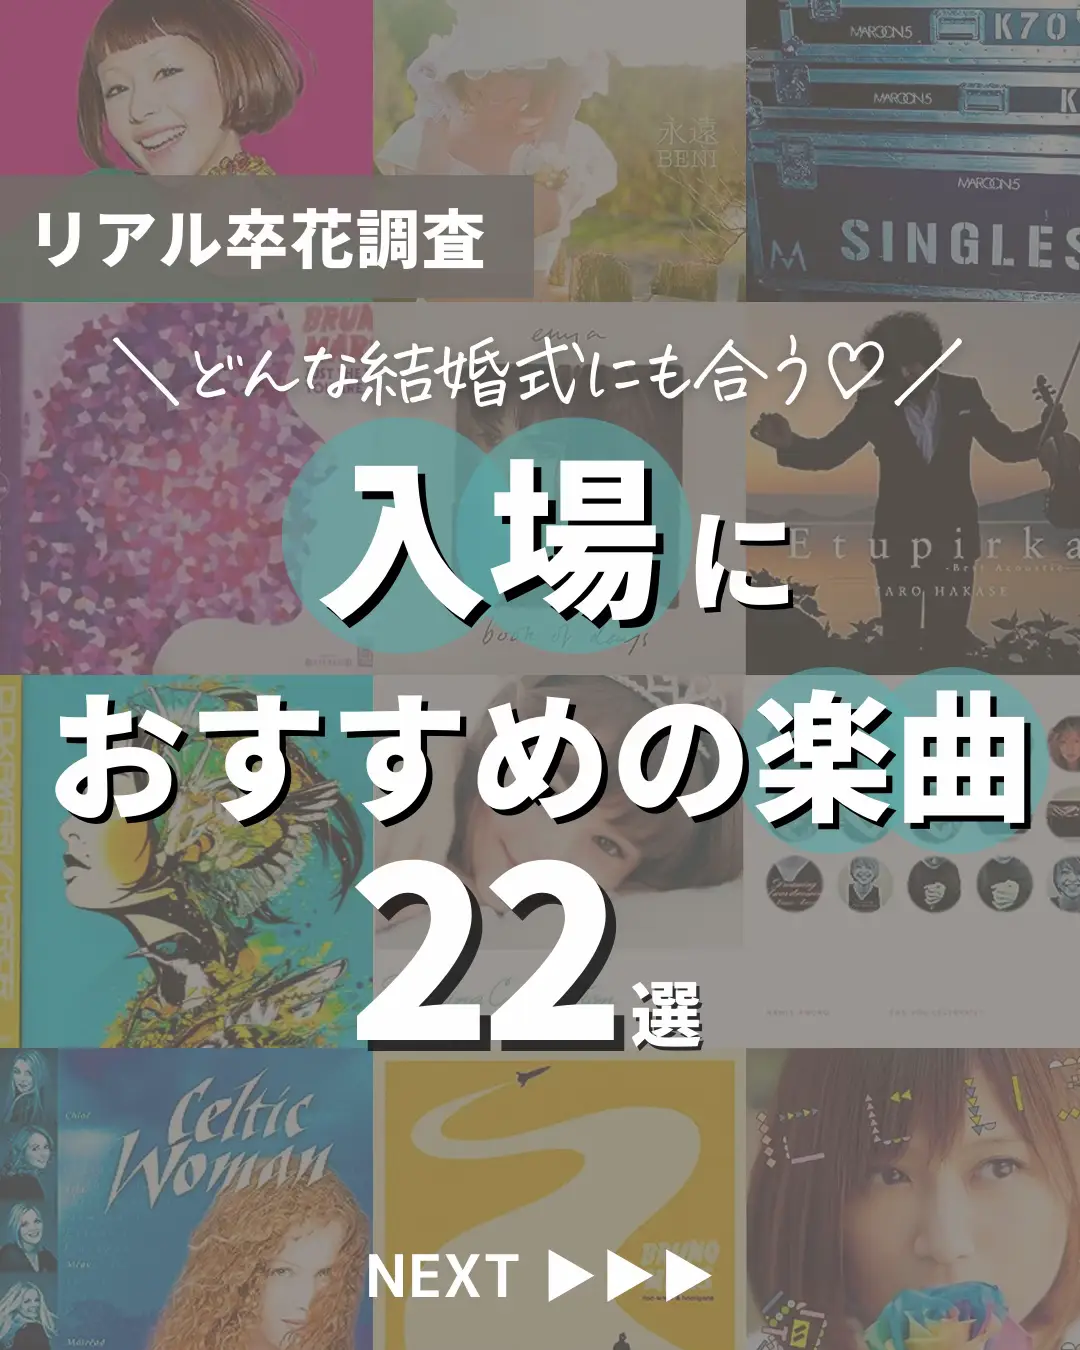 Top Songs to Listen in Summer - Lemon8検索